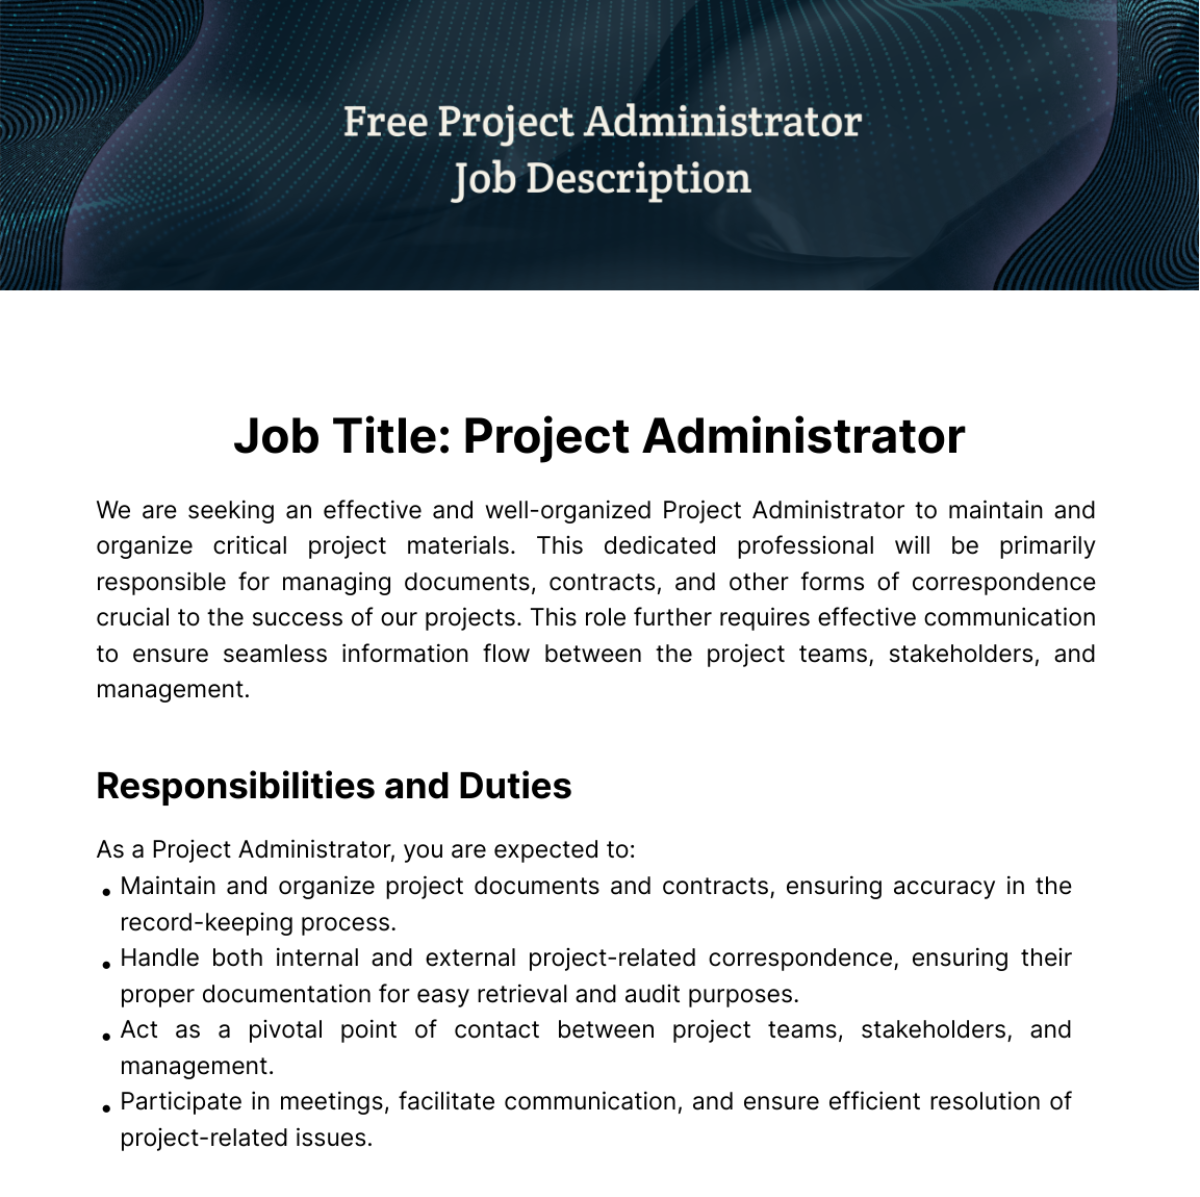 Free Project Administrator Job Description Template